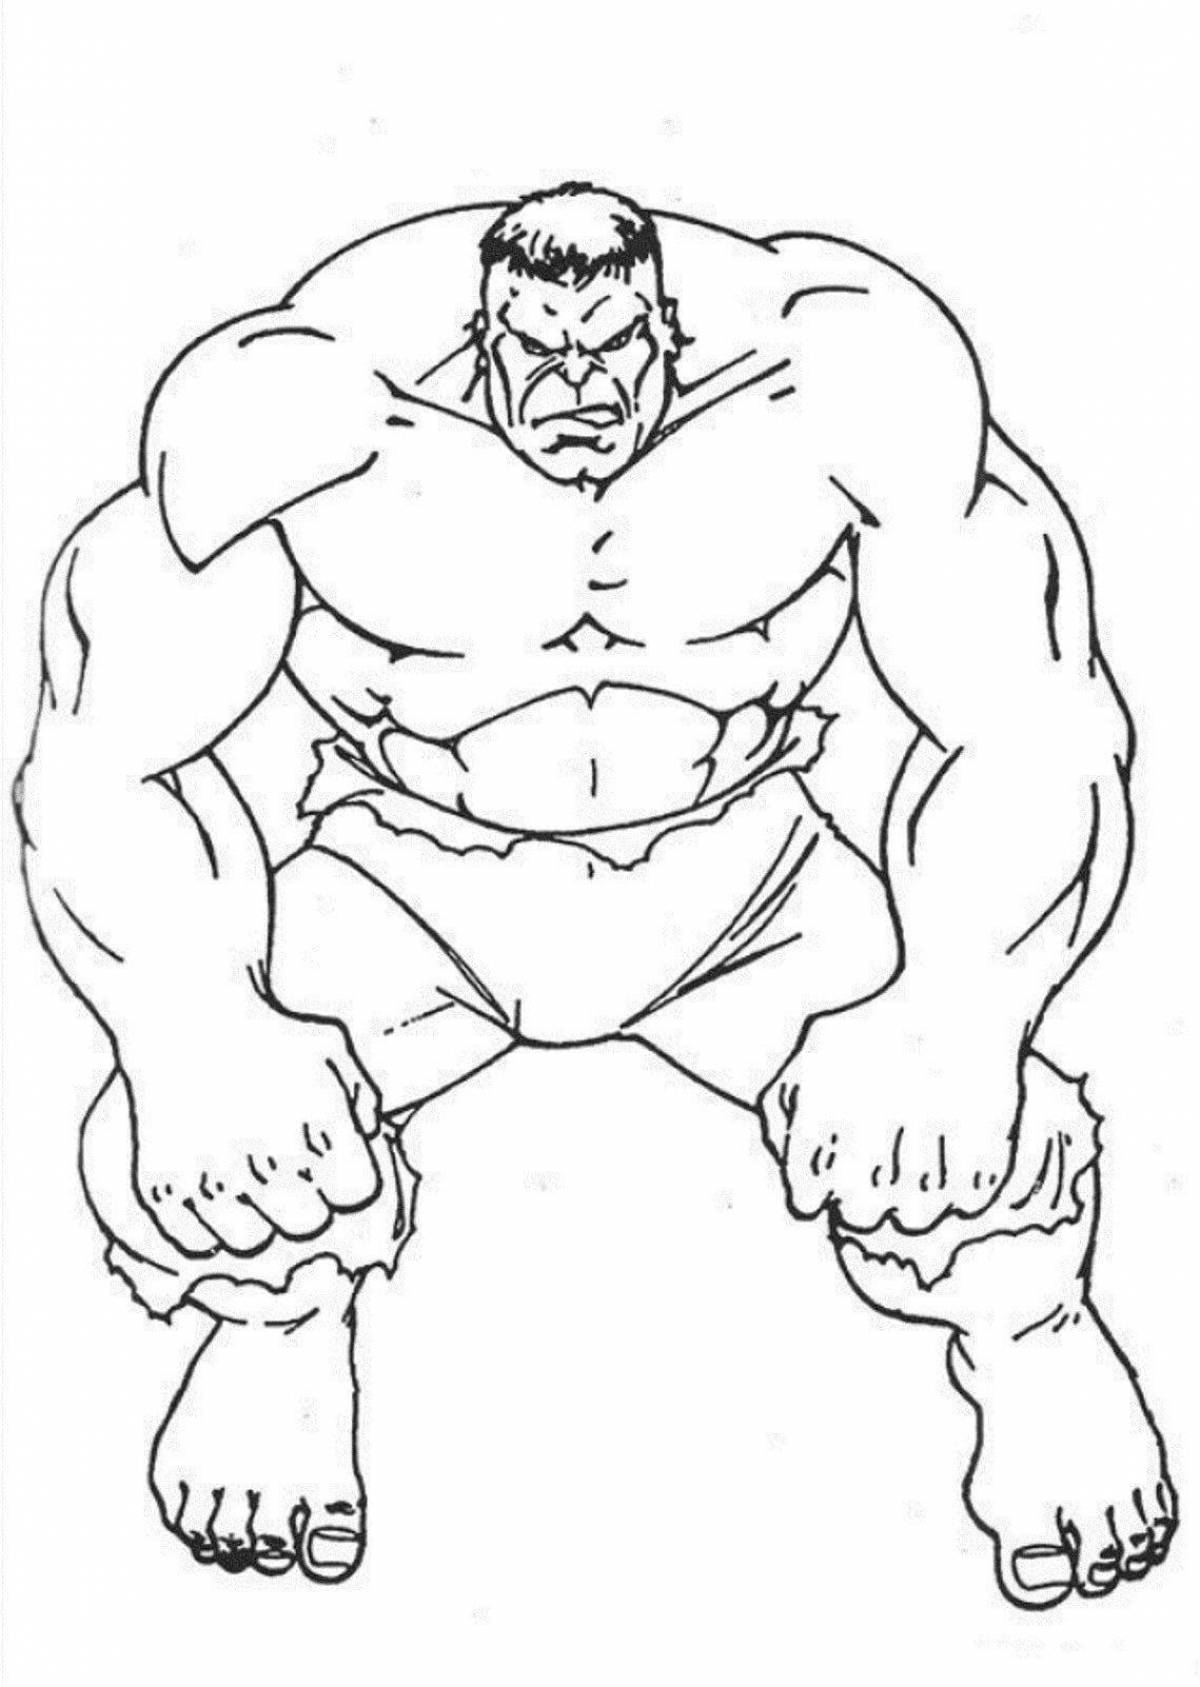 Hulk and Venom art coloring page